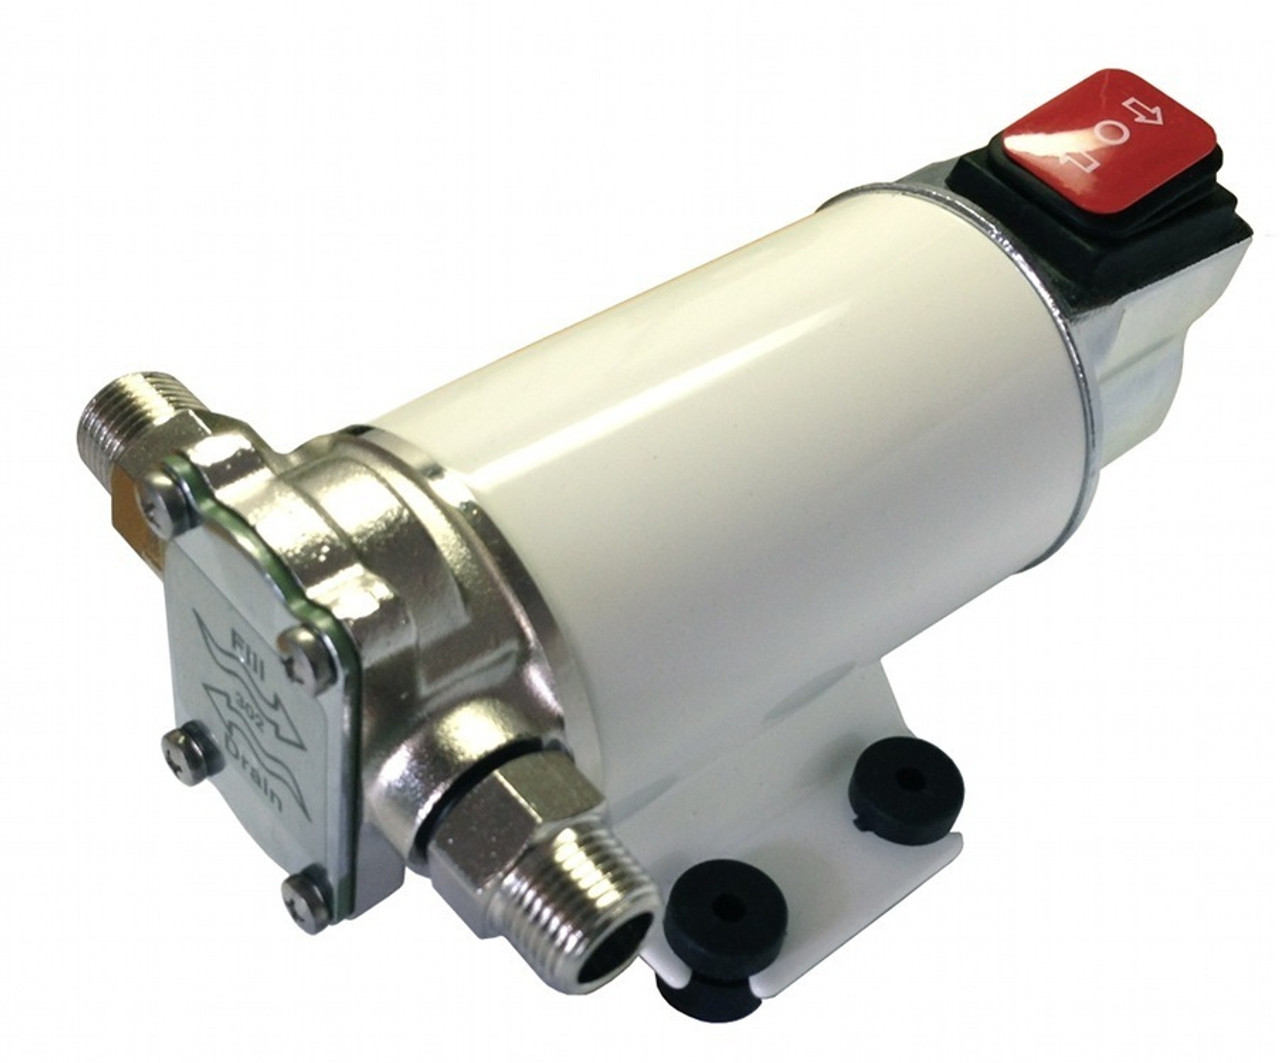 12 Volt reversible gear pump 4 GPM